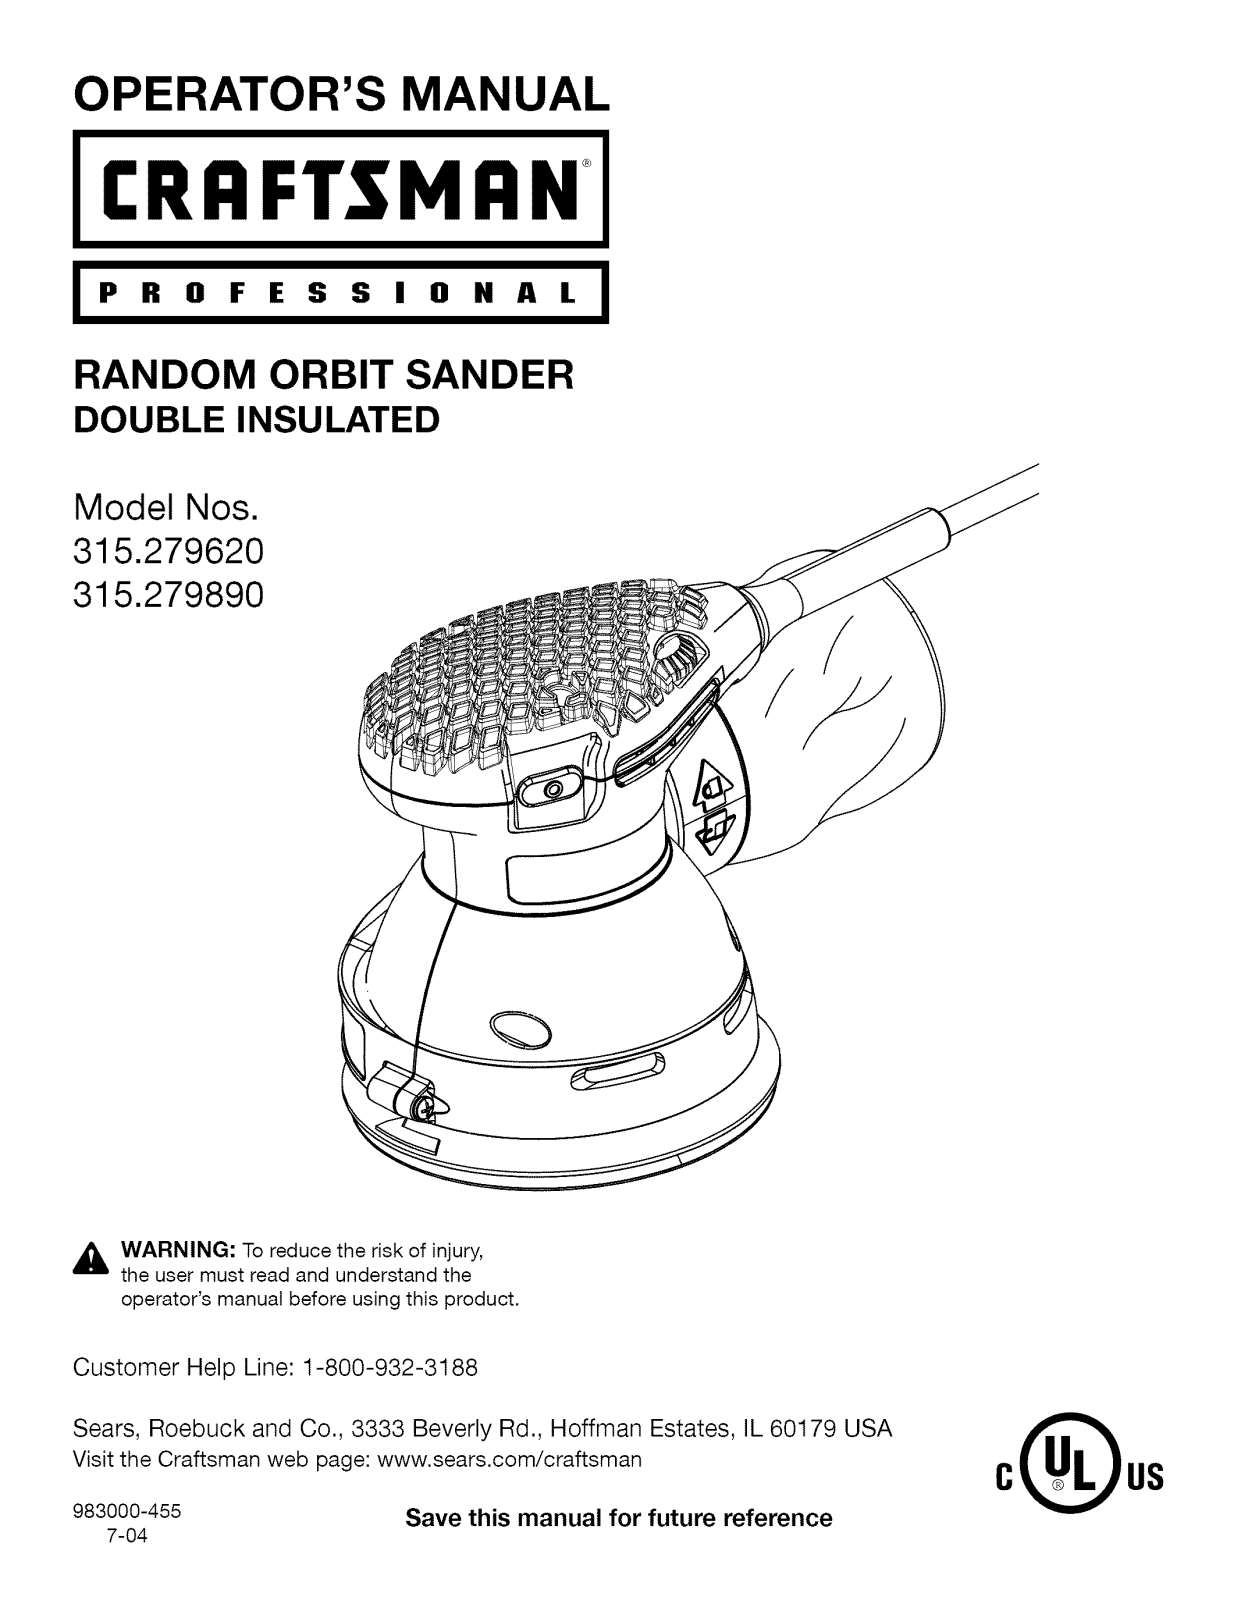 Craftsman 315279890, 315279620 Owner’s Manual